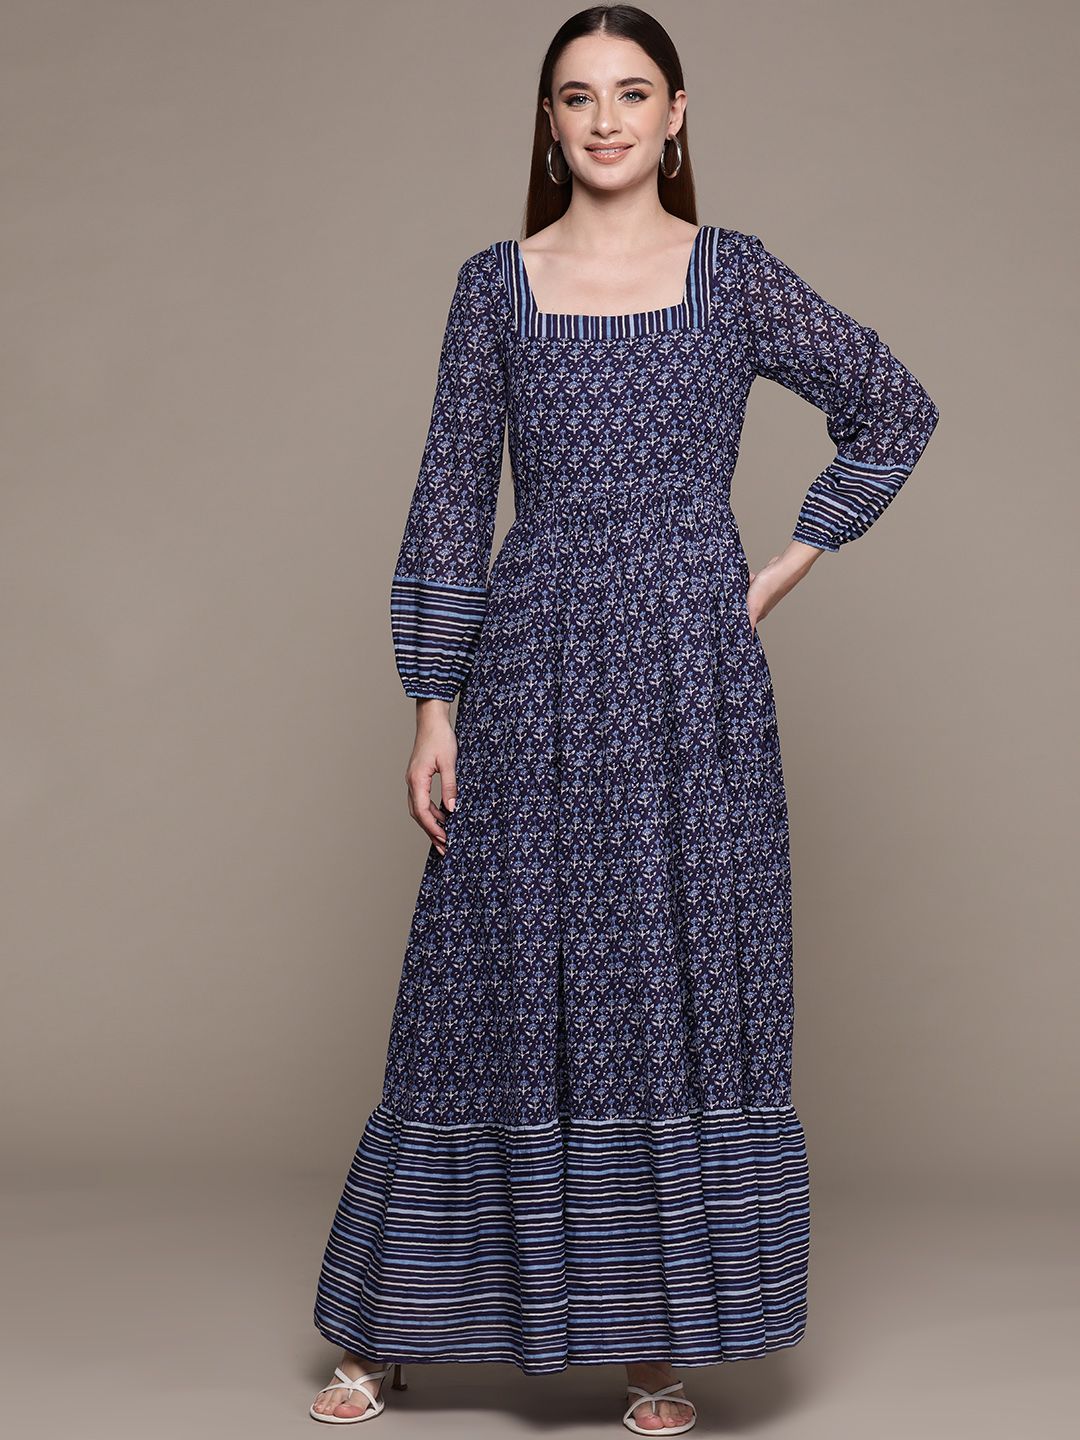 aarke Ritu Kumar Floral Print Puff Sleeve A-Line Maxi Dress Price in India